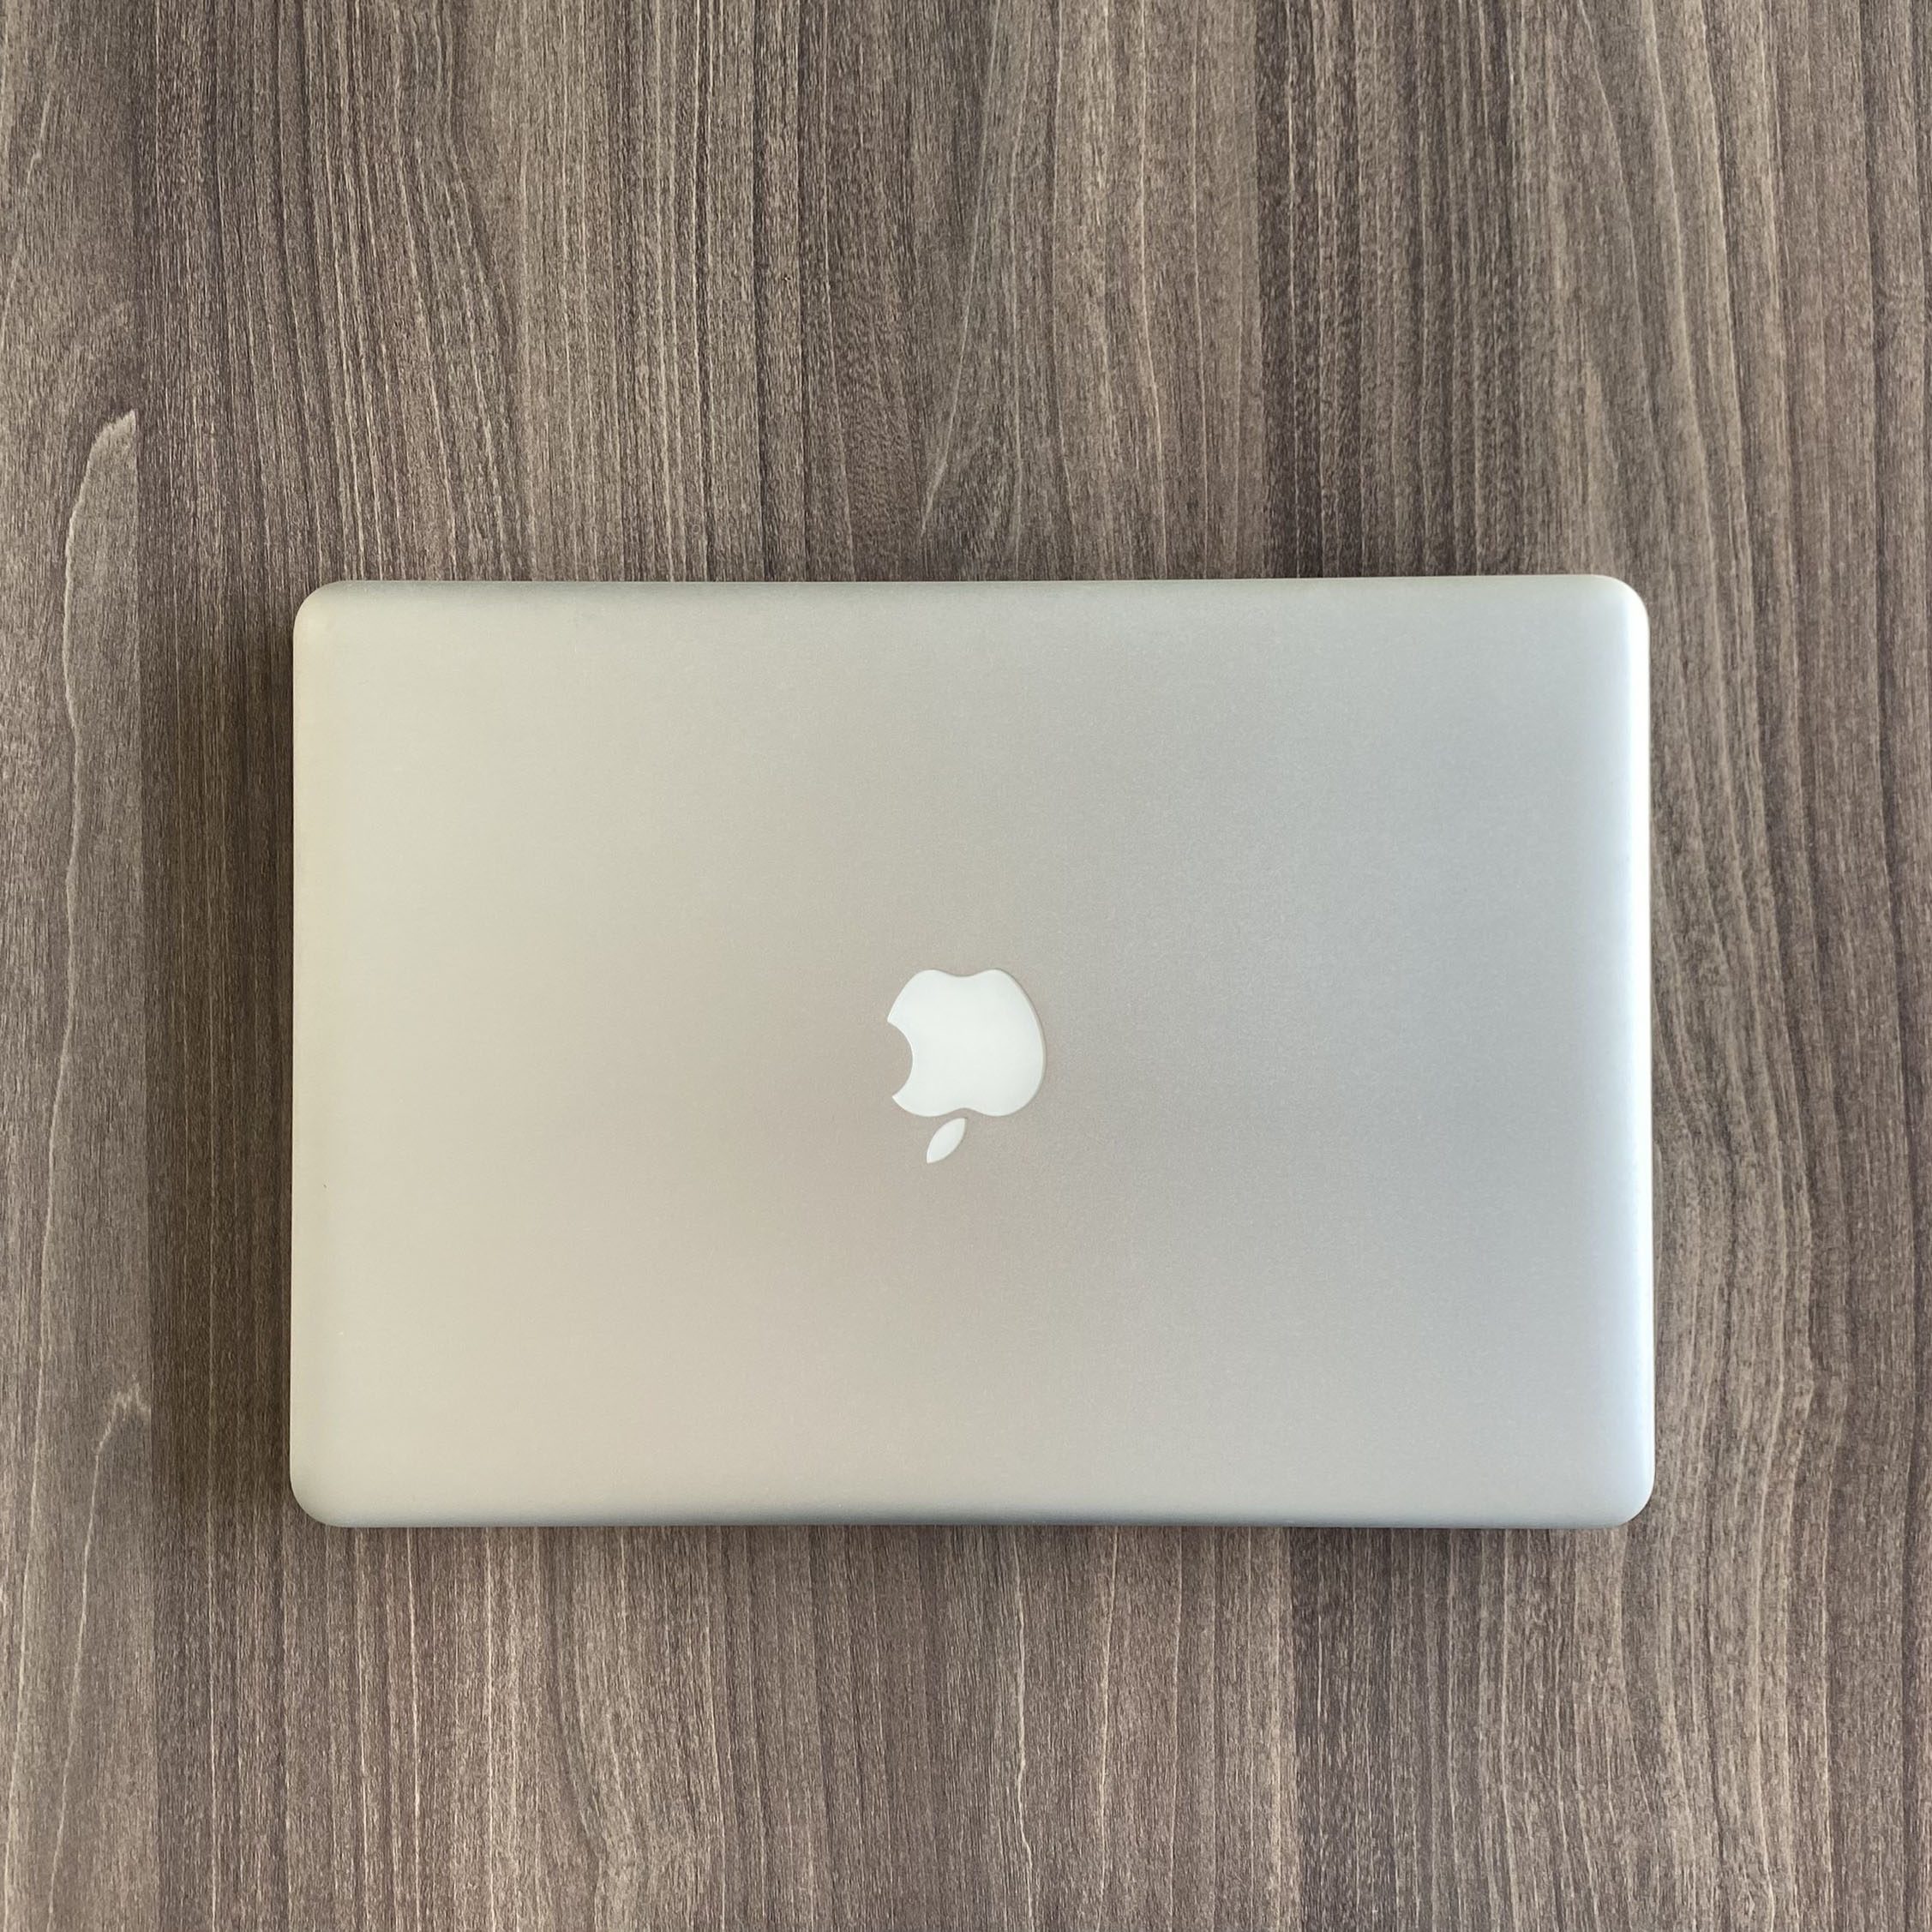 MacBook Pro (13-inch, Mid 2012) Core i5